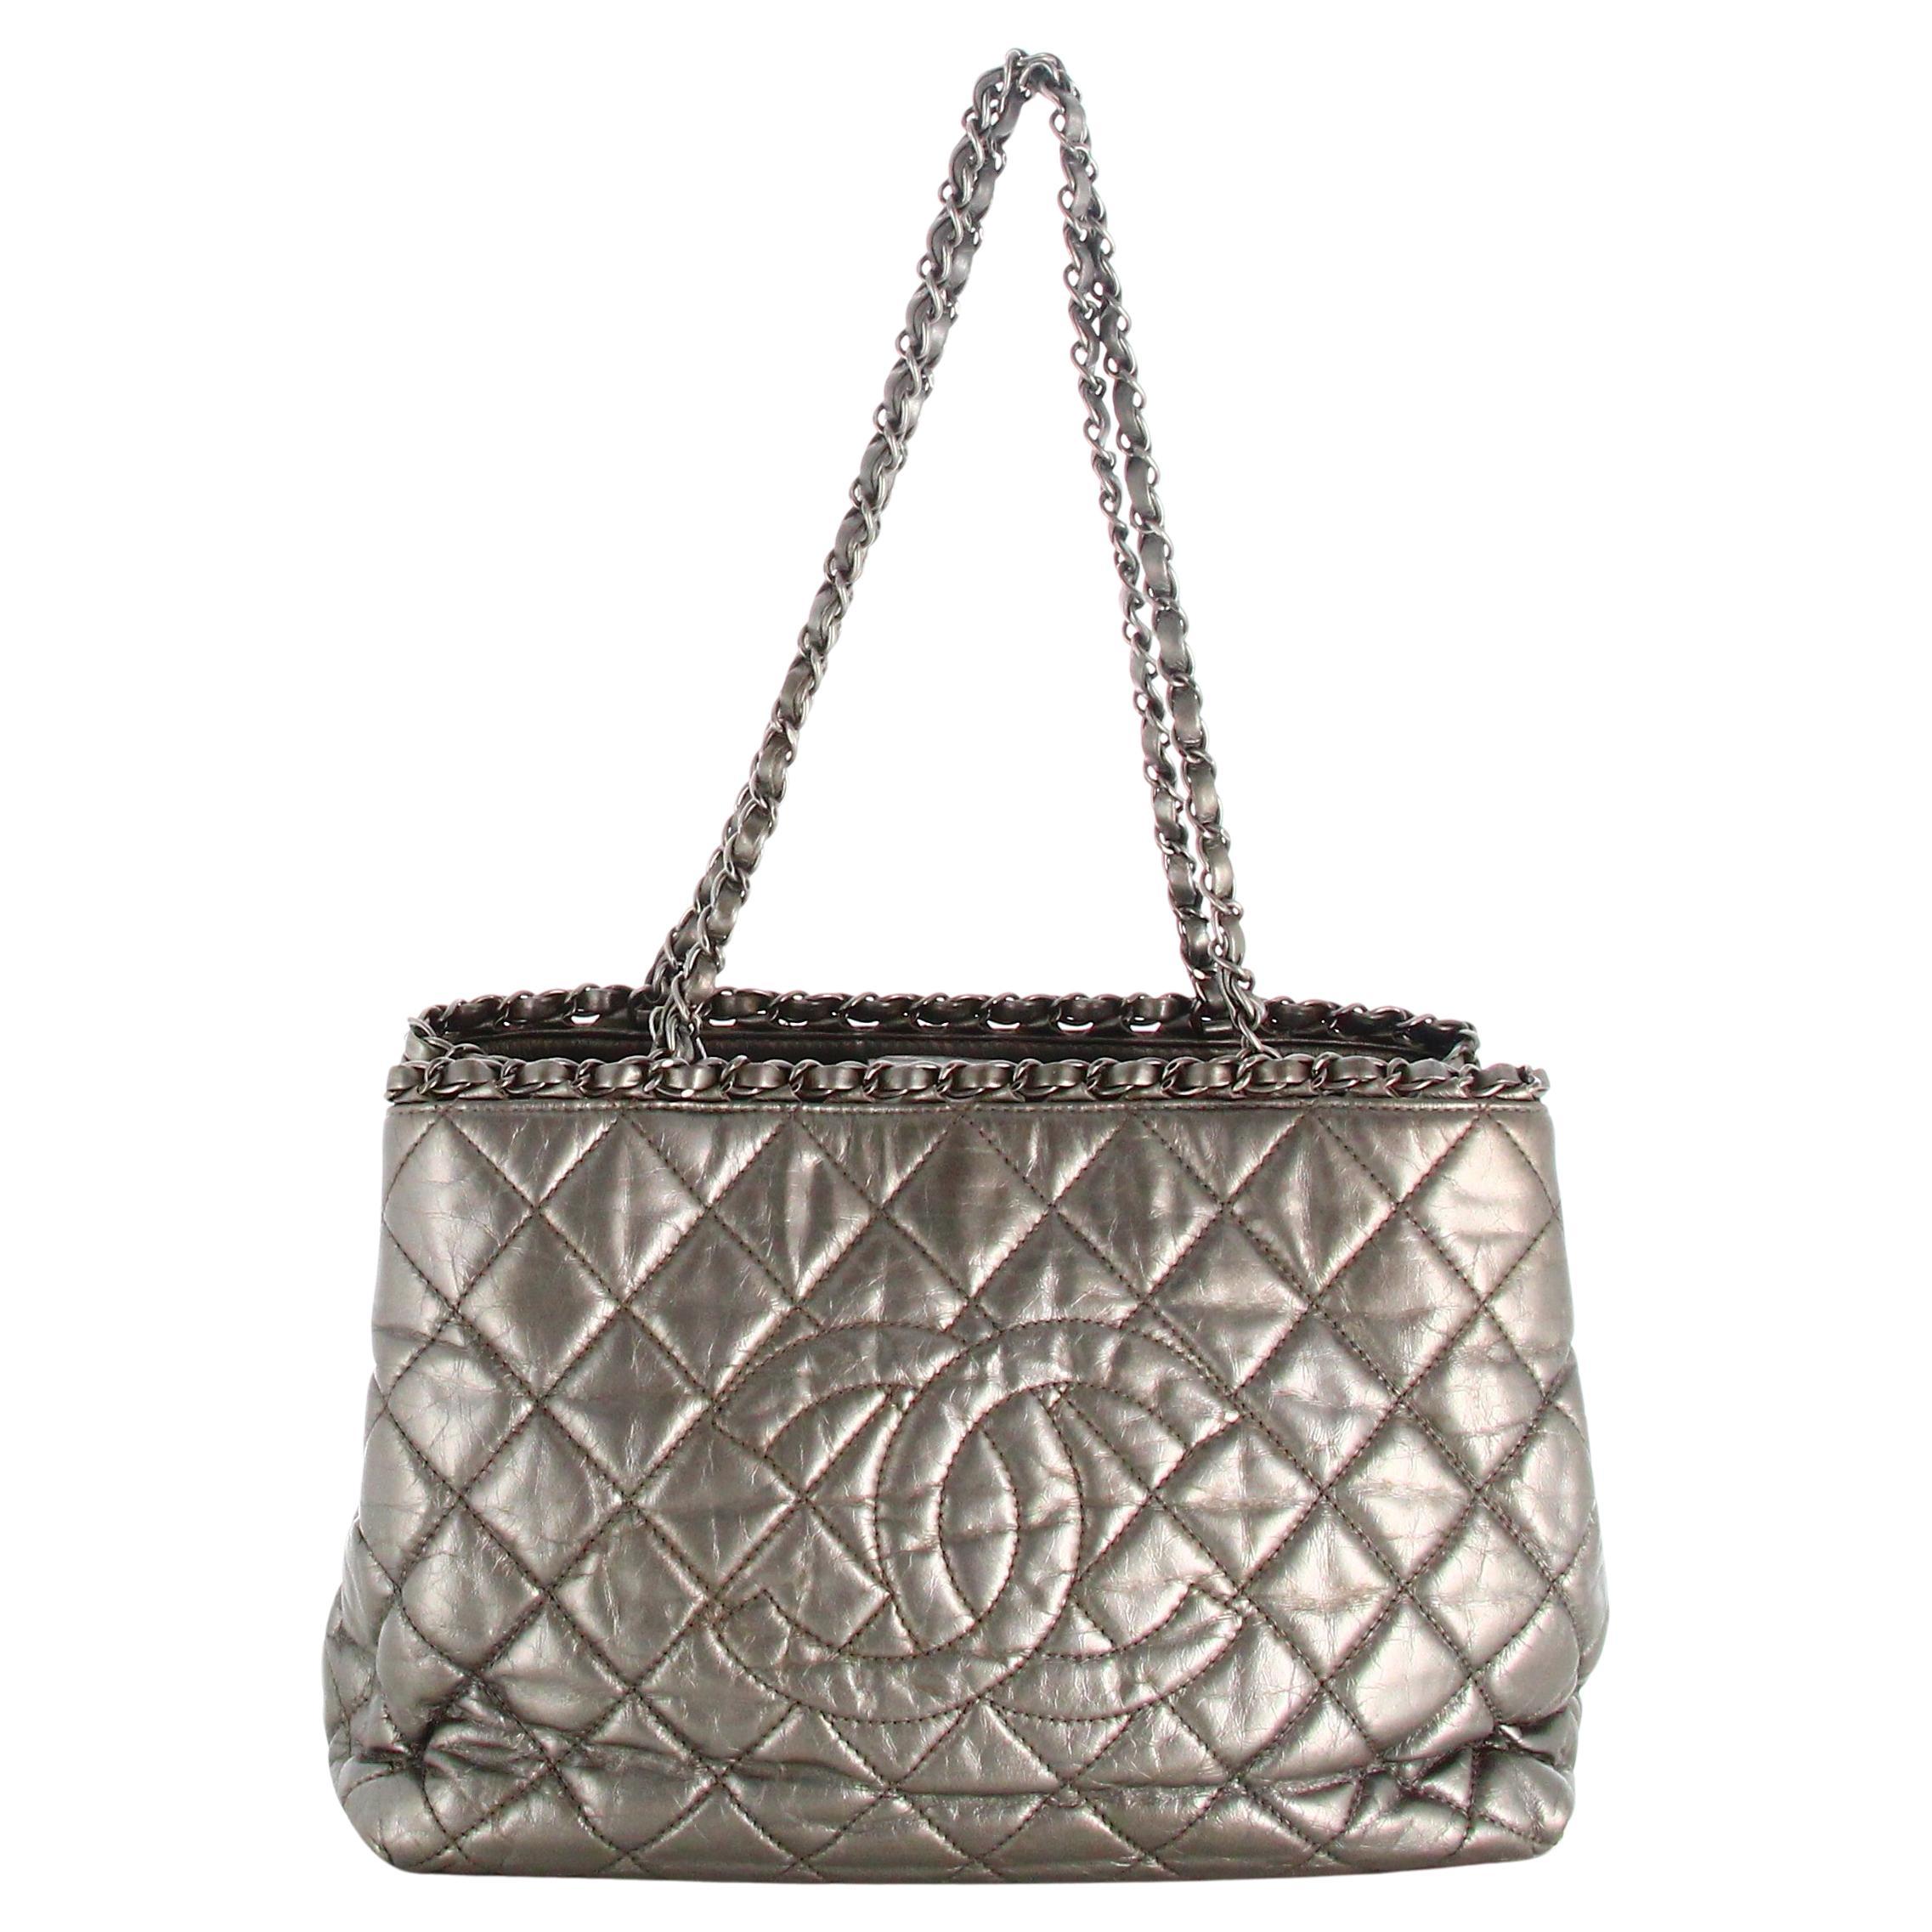 2012 Chanel Chain Me Tote Handbag Grey